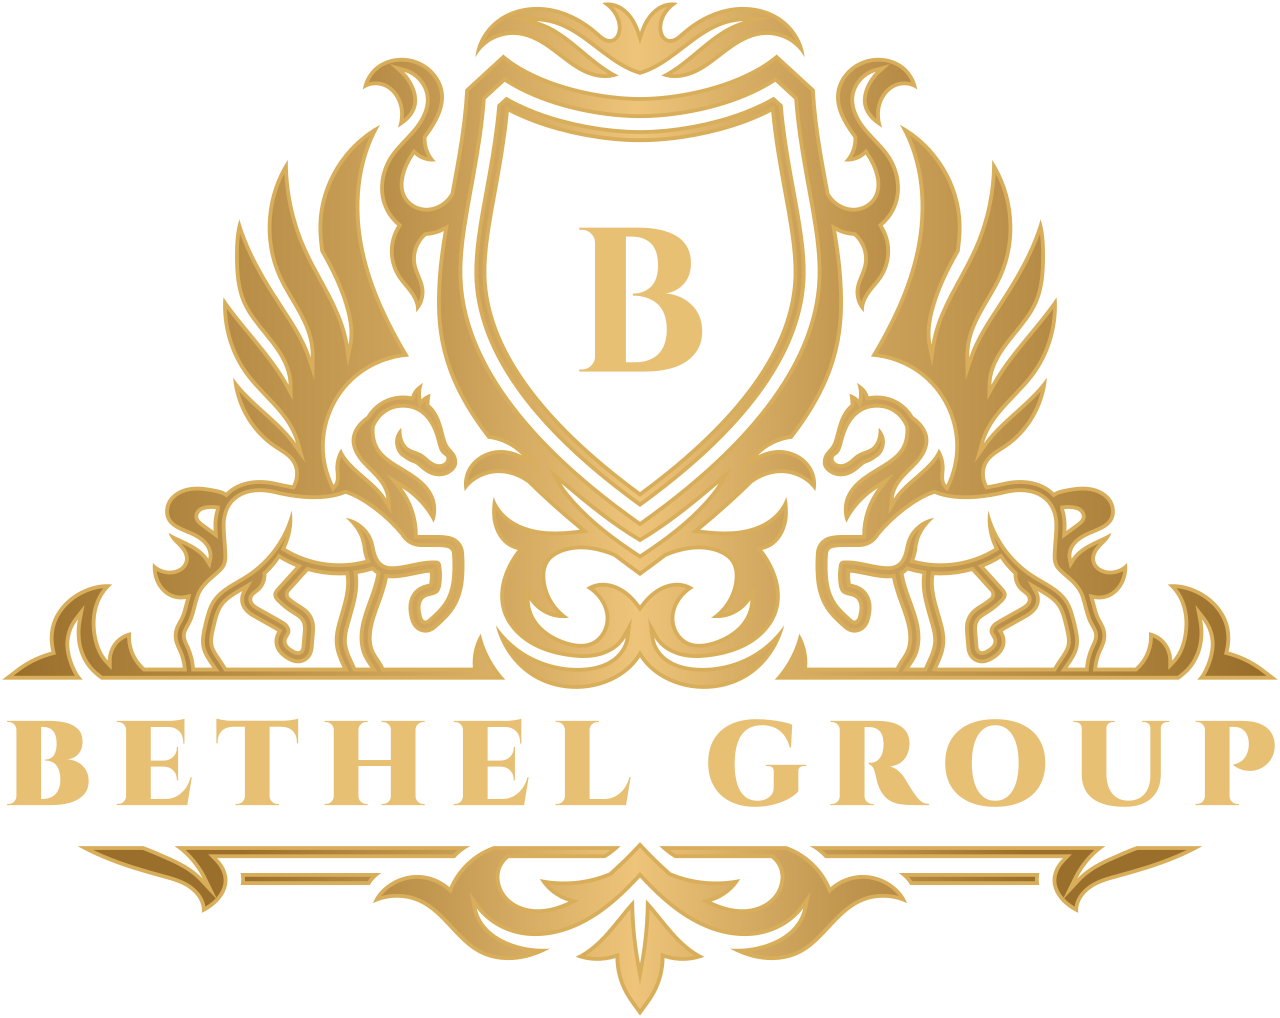 Bethel Group's logo